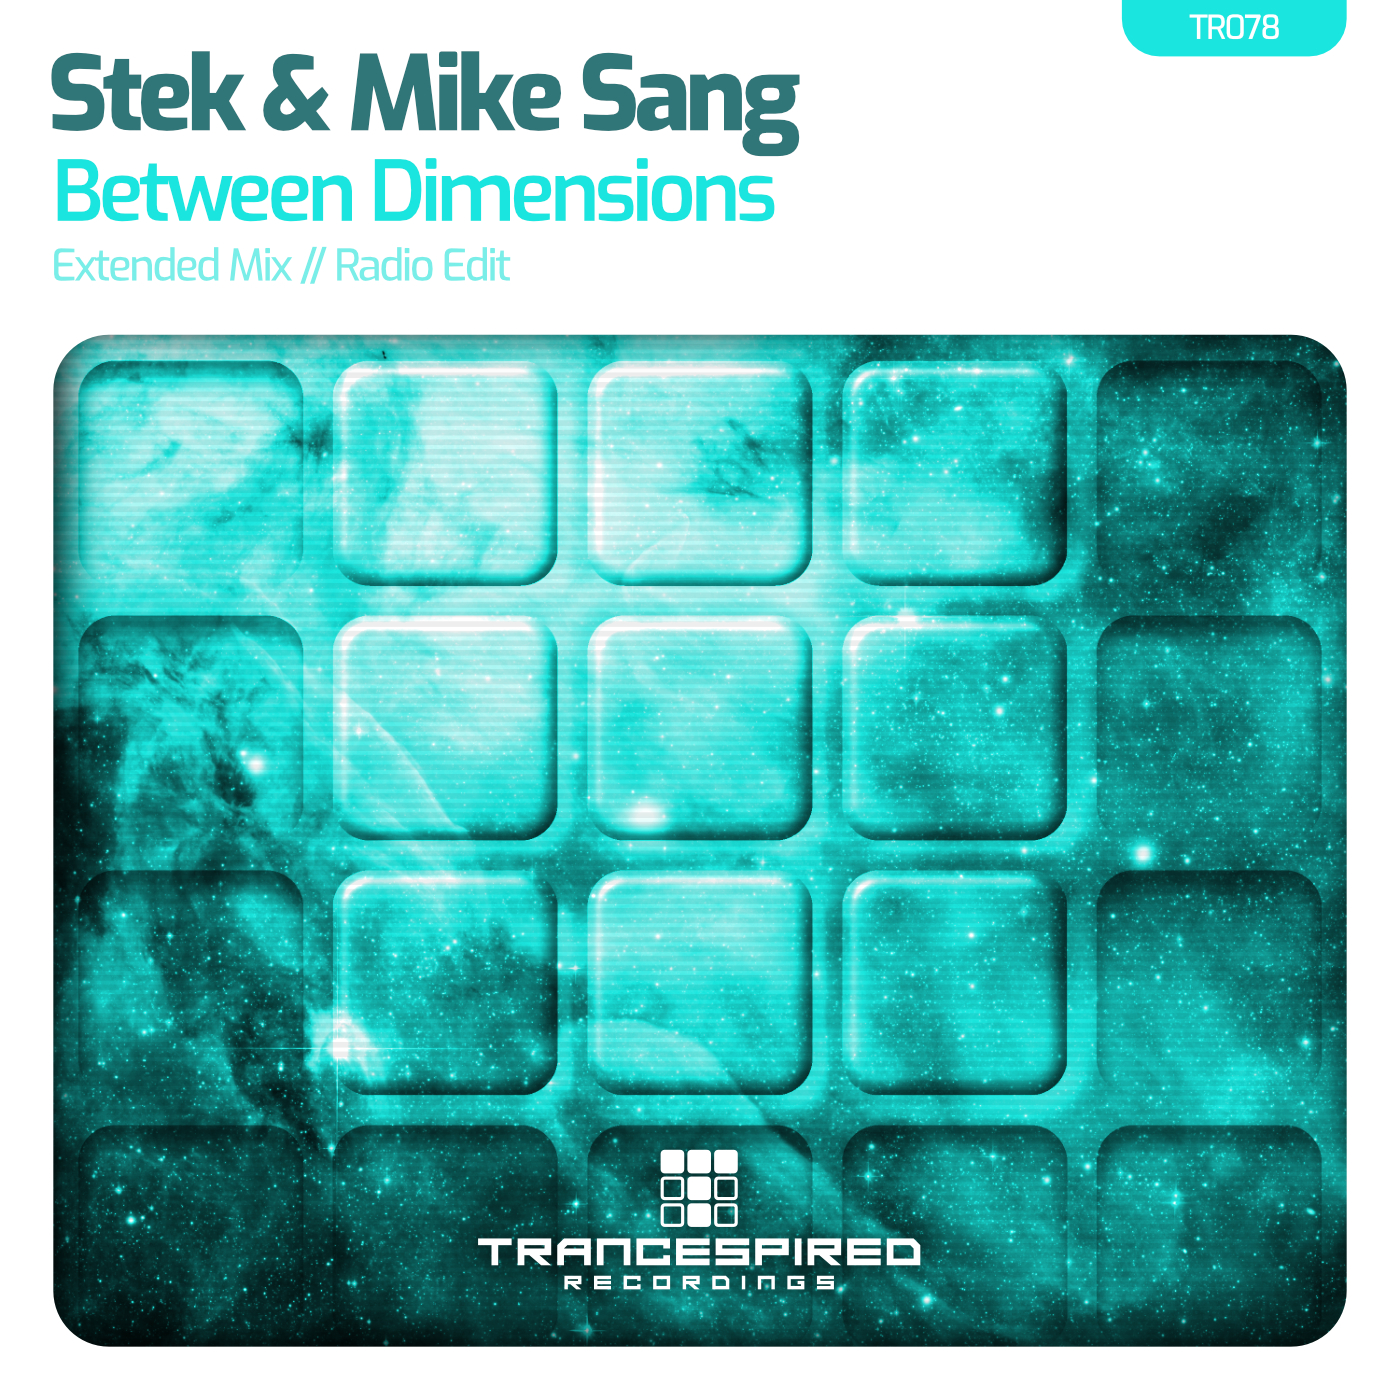 Stek and Mike Sang presents Between Dimensions on Trancespired Recordings